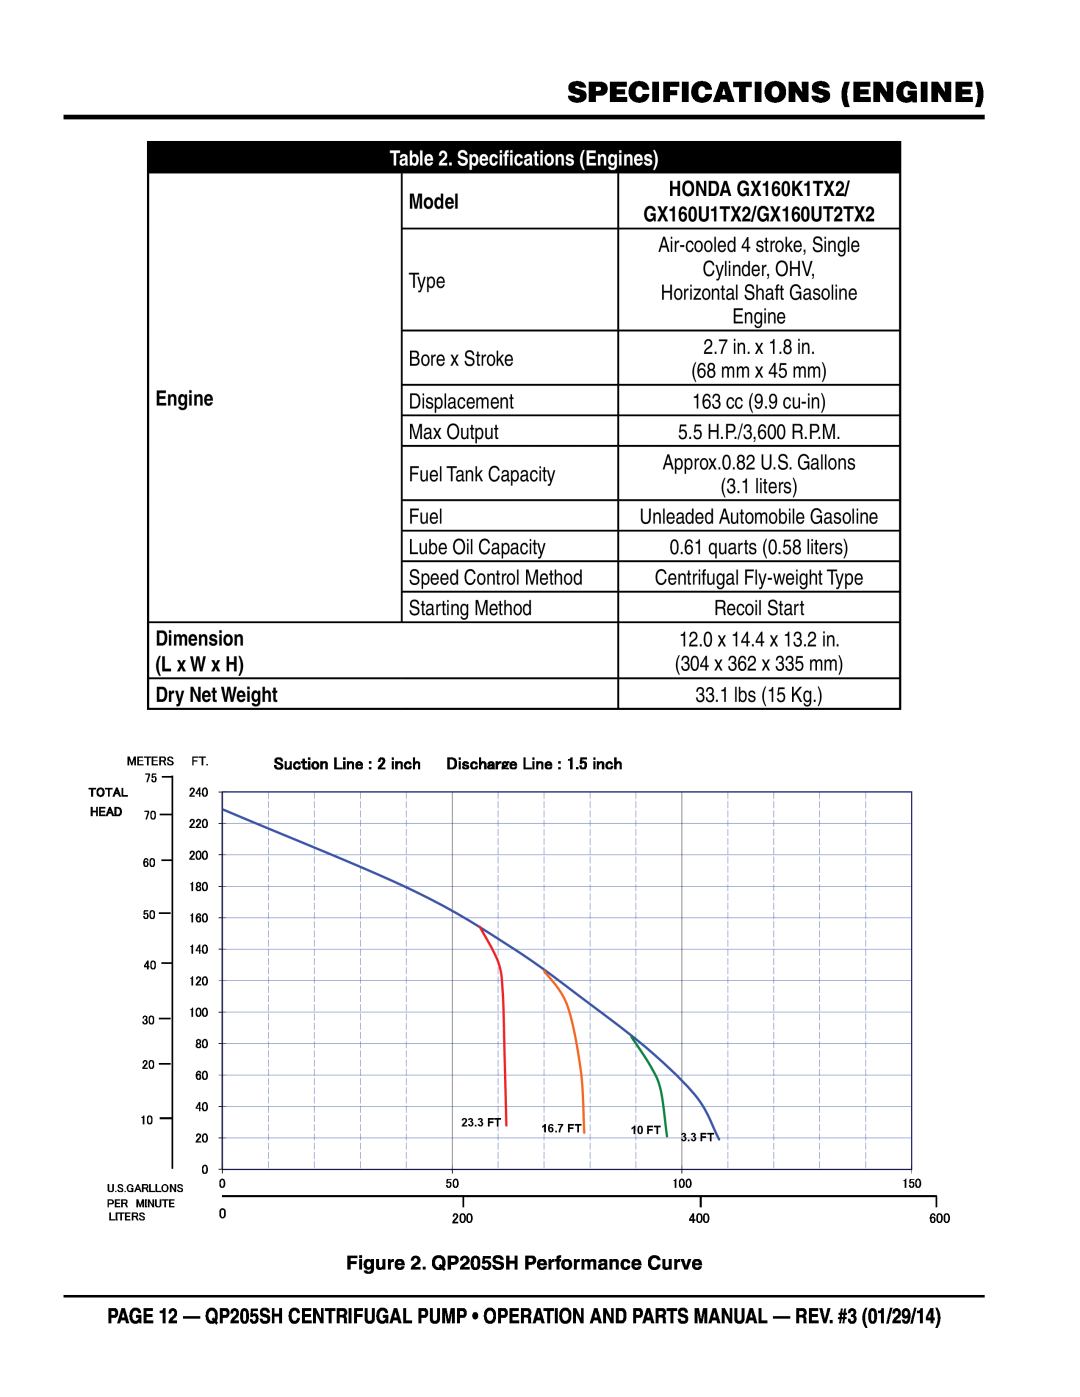 Honda Power Equipment Specifications Engines, Model, Dry Net Weight, QP205SH Performance Curve, HONDA GX160K1TX2 